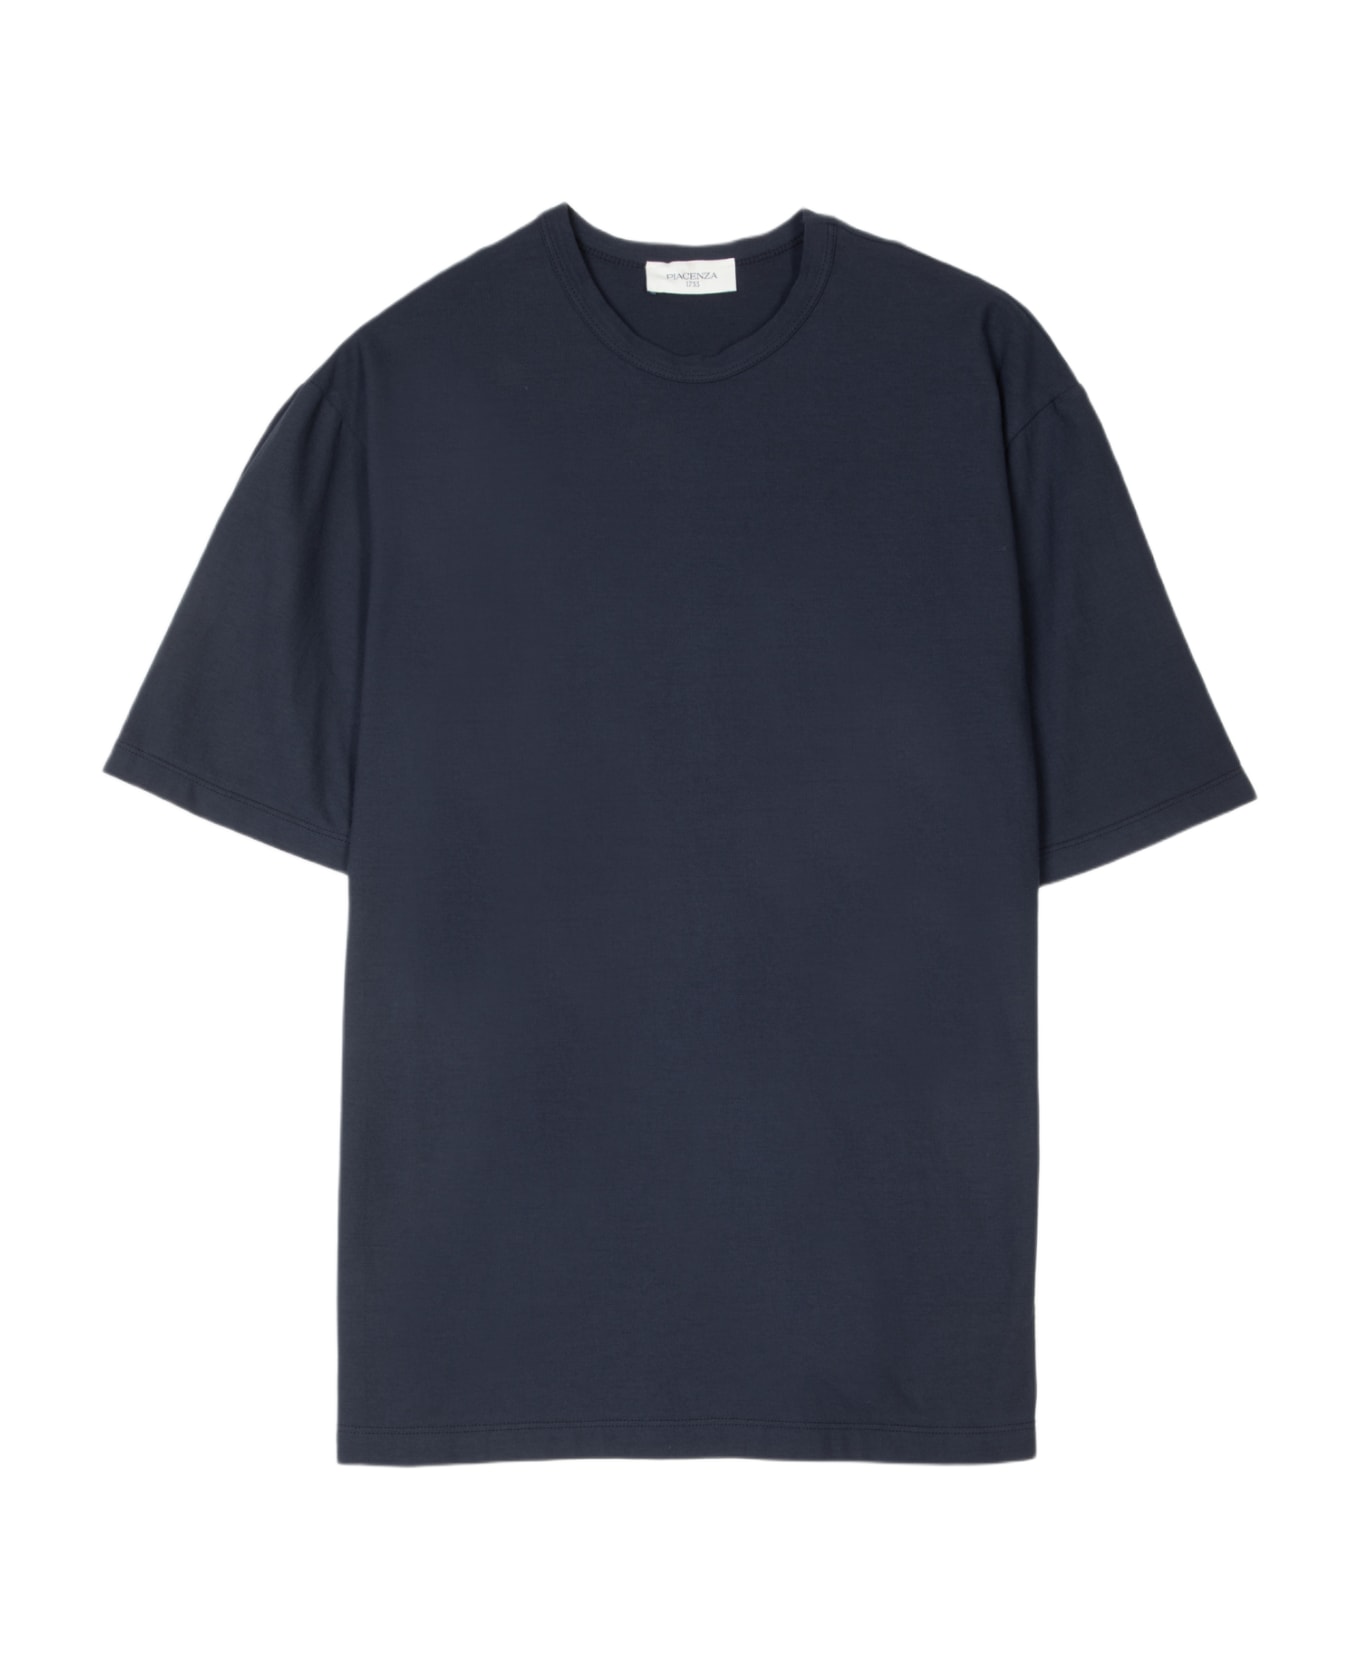 Piacenza Cashmere T-shirt Dark blue lightweight cotton t-shirt - Blu scuro